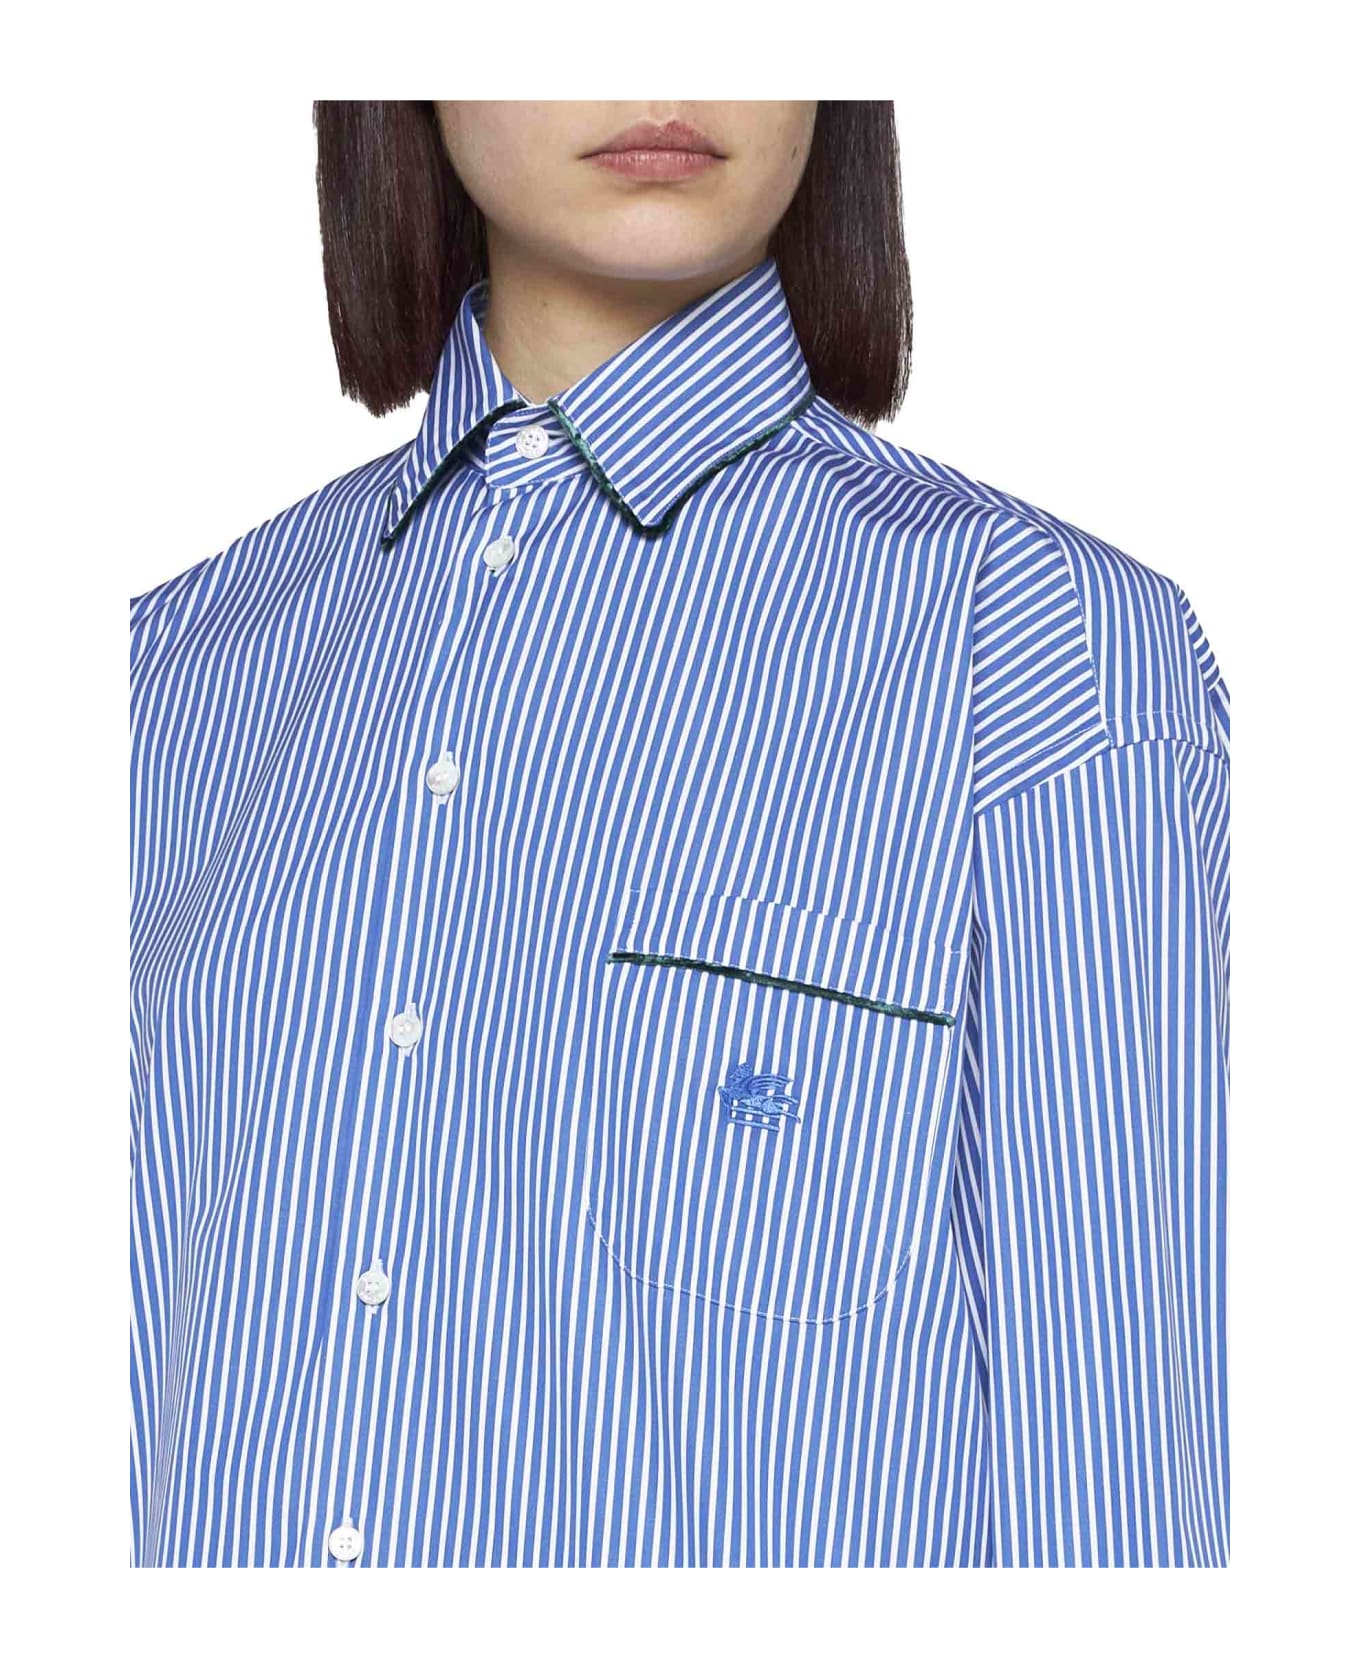 Etro Shirt - Bicolore シャツ